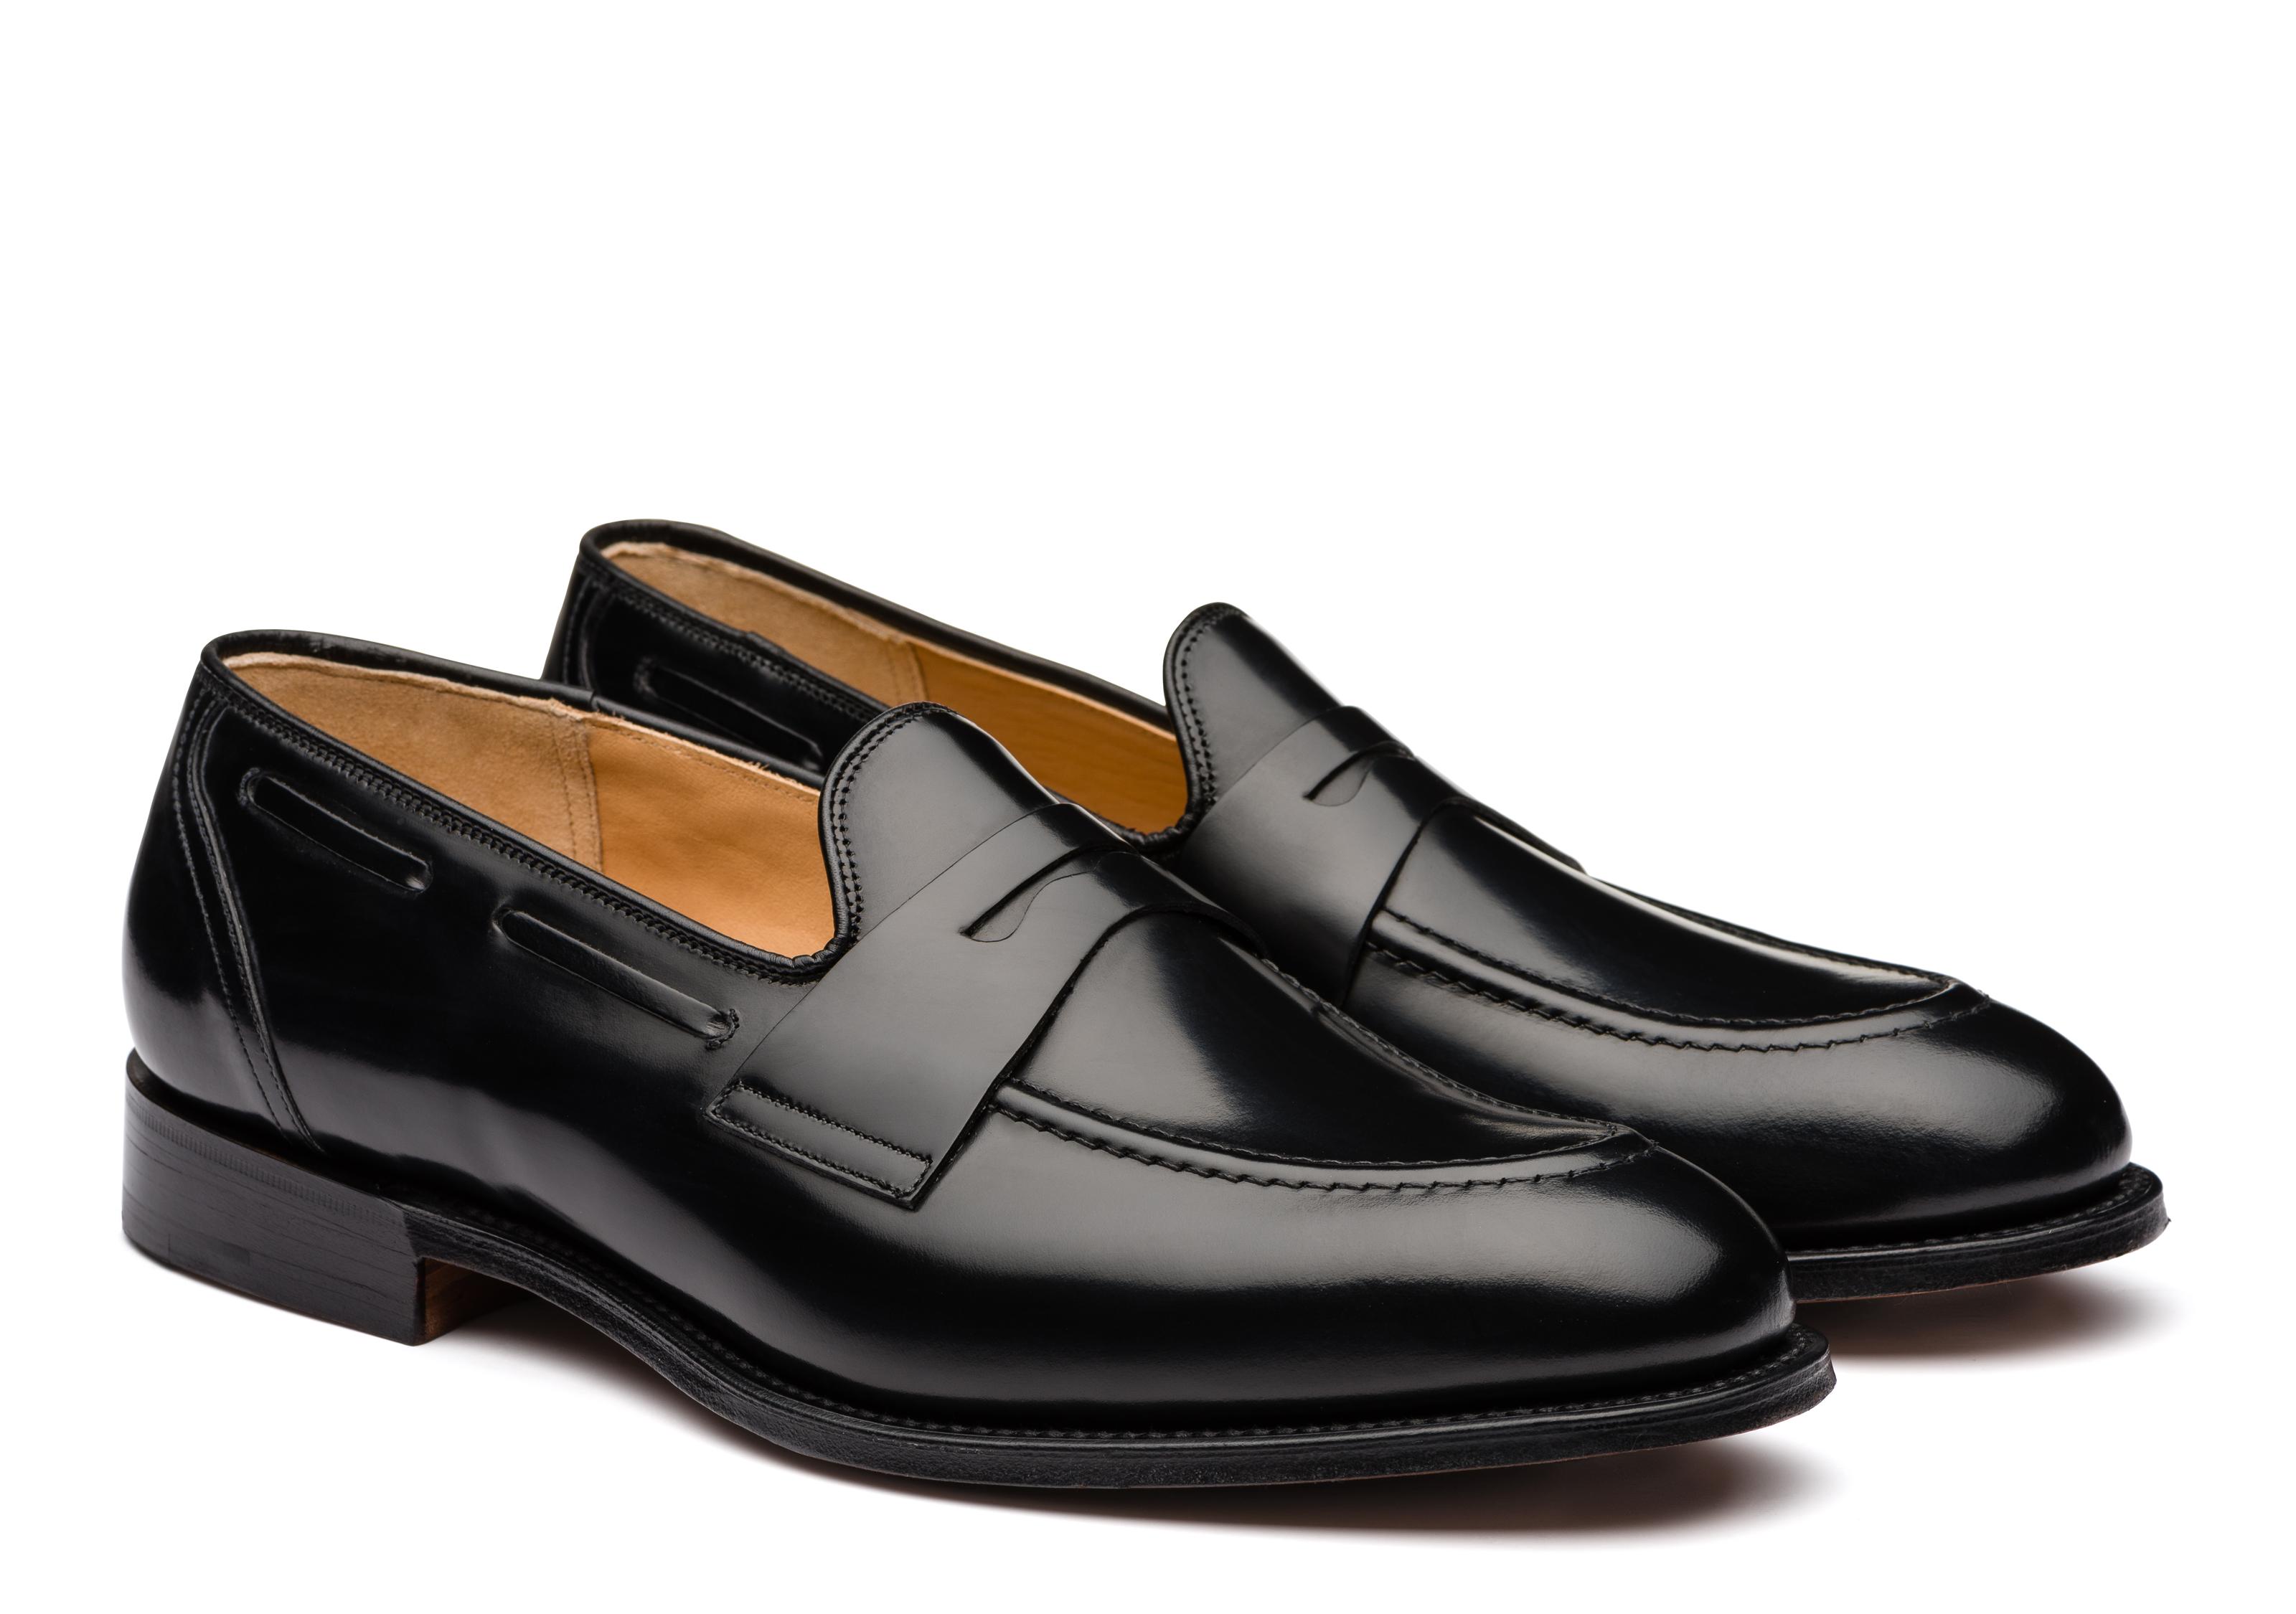 Church's Leather Polished Binder Loafer in Black for Men - Lyst